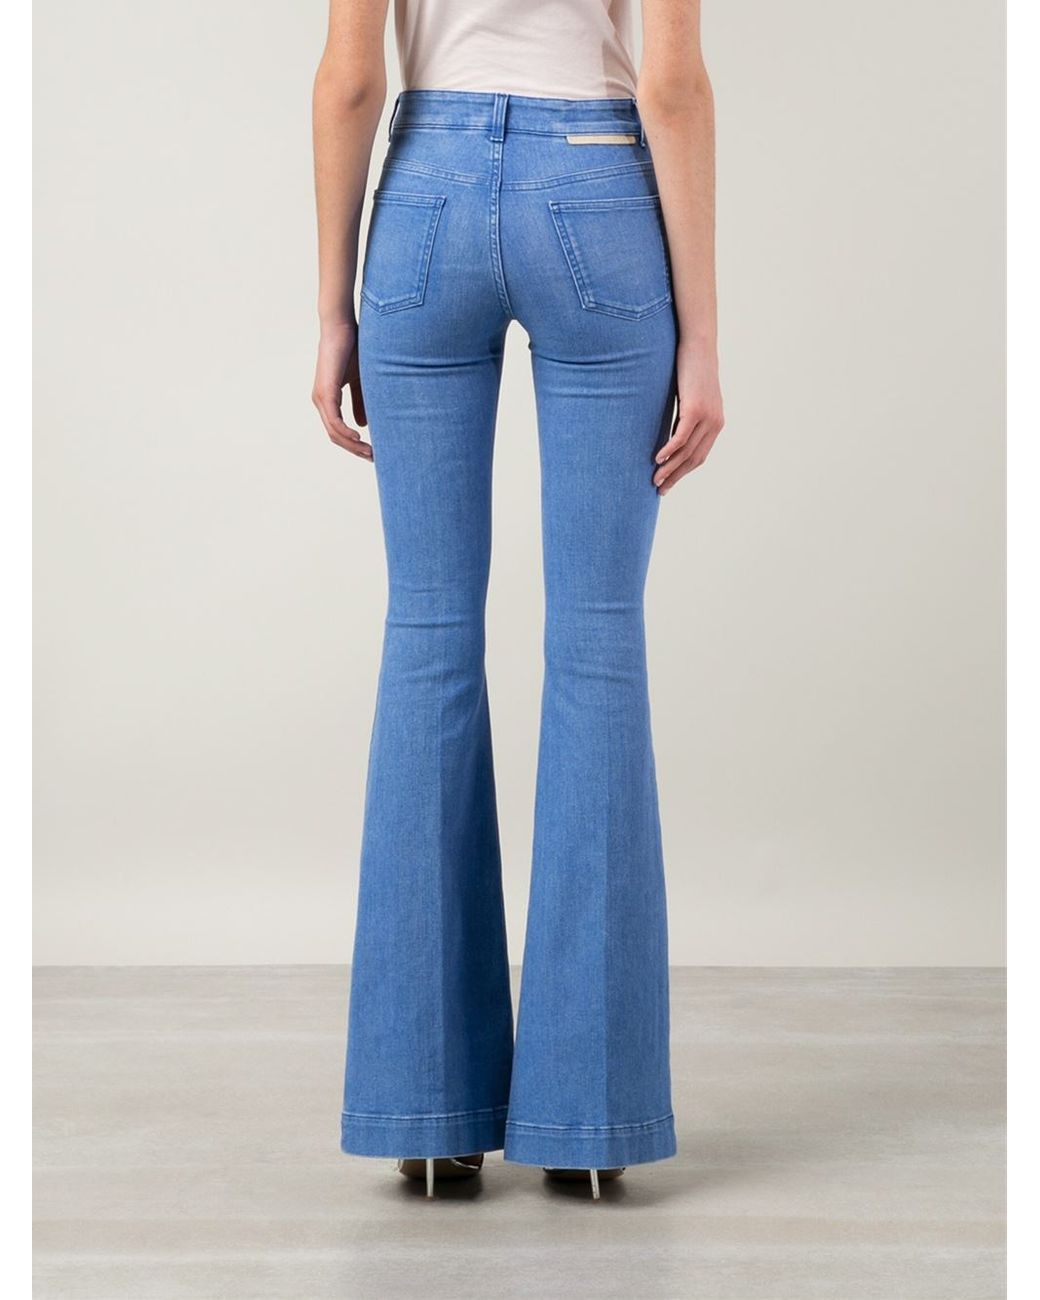 Stella McCartney Denim Flared Jeans in Blue | Lyst